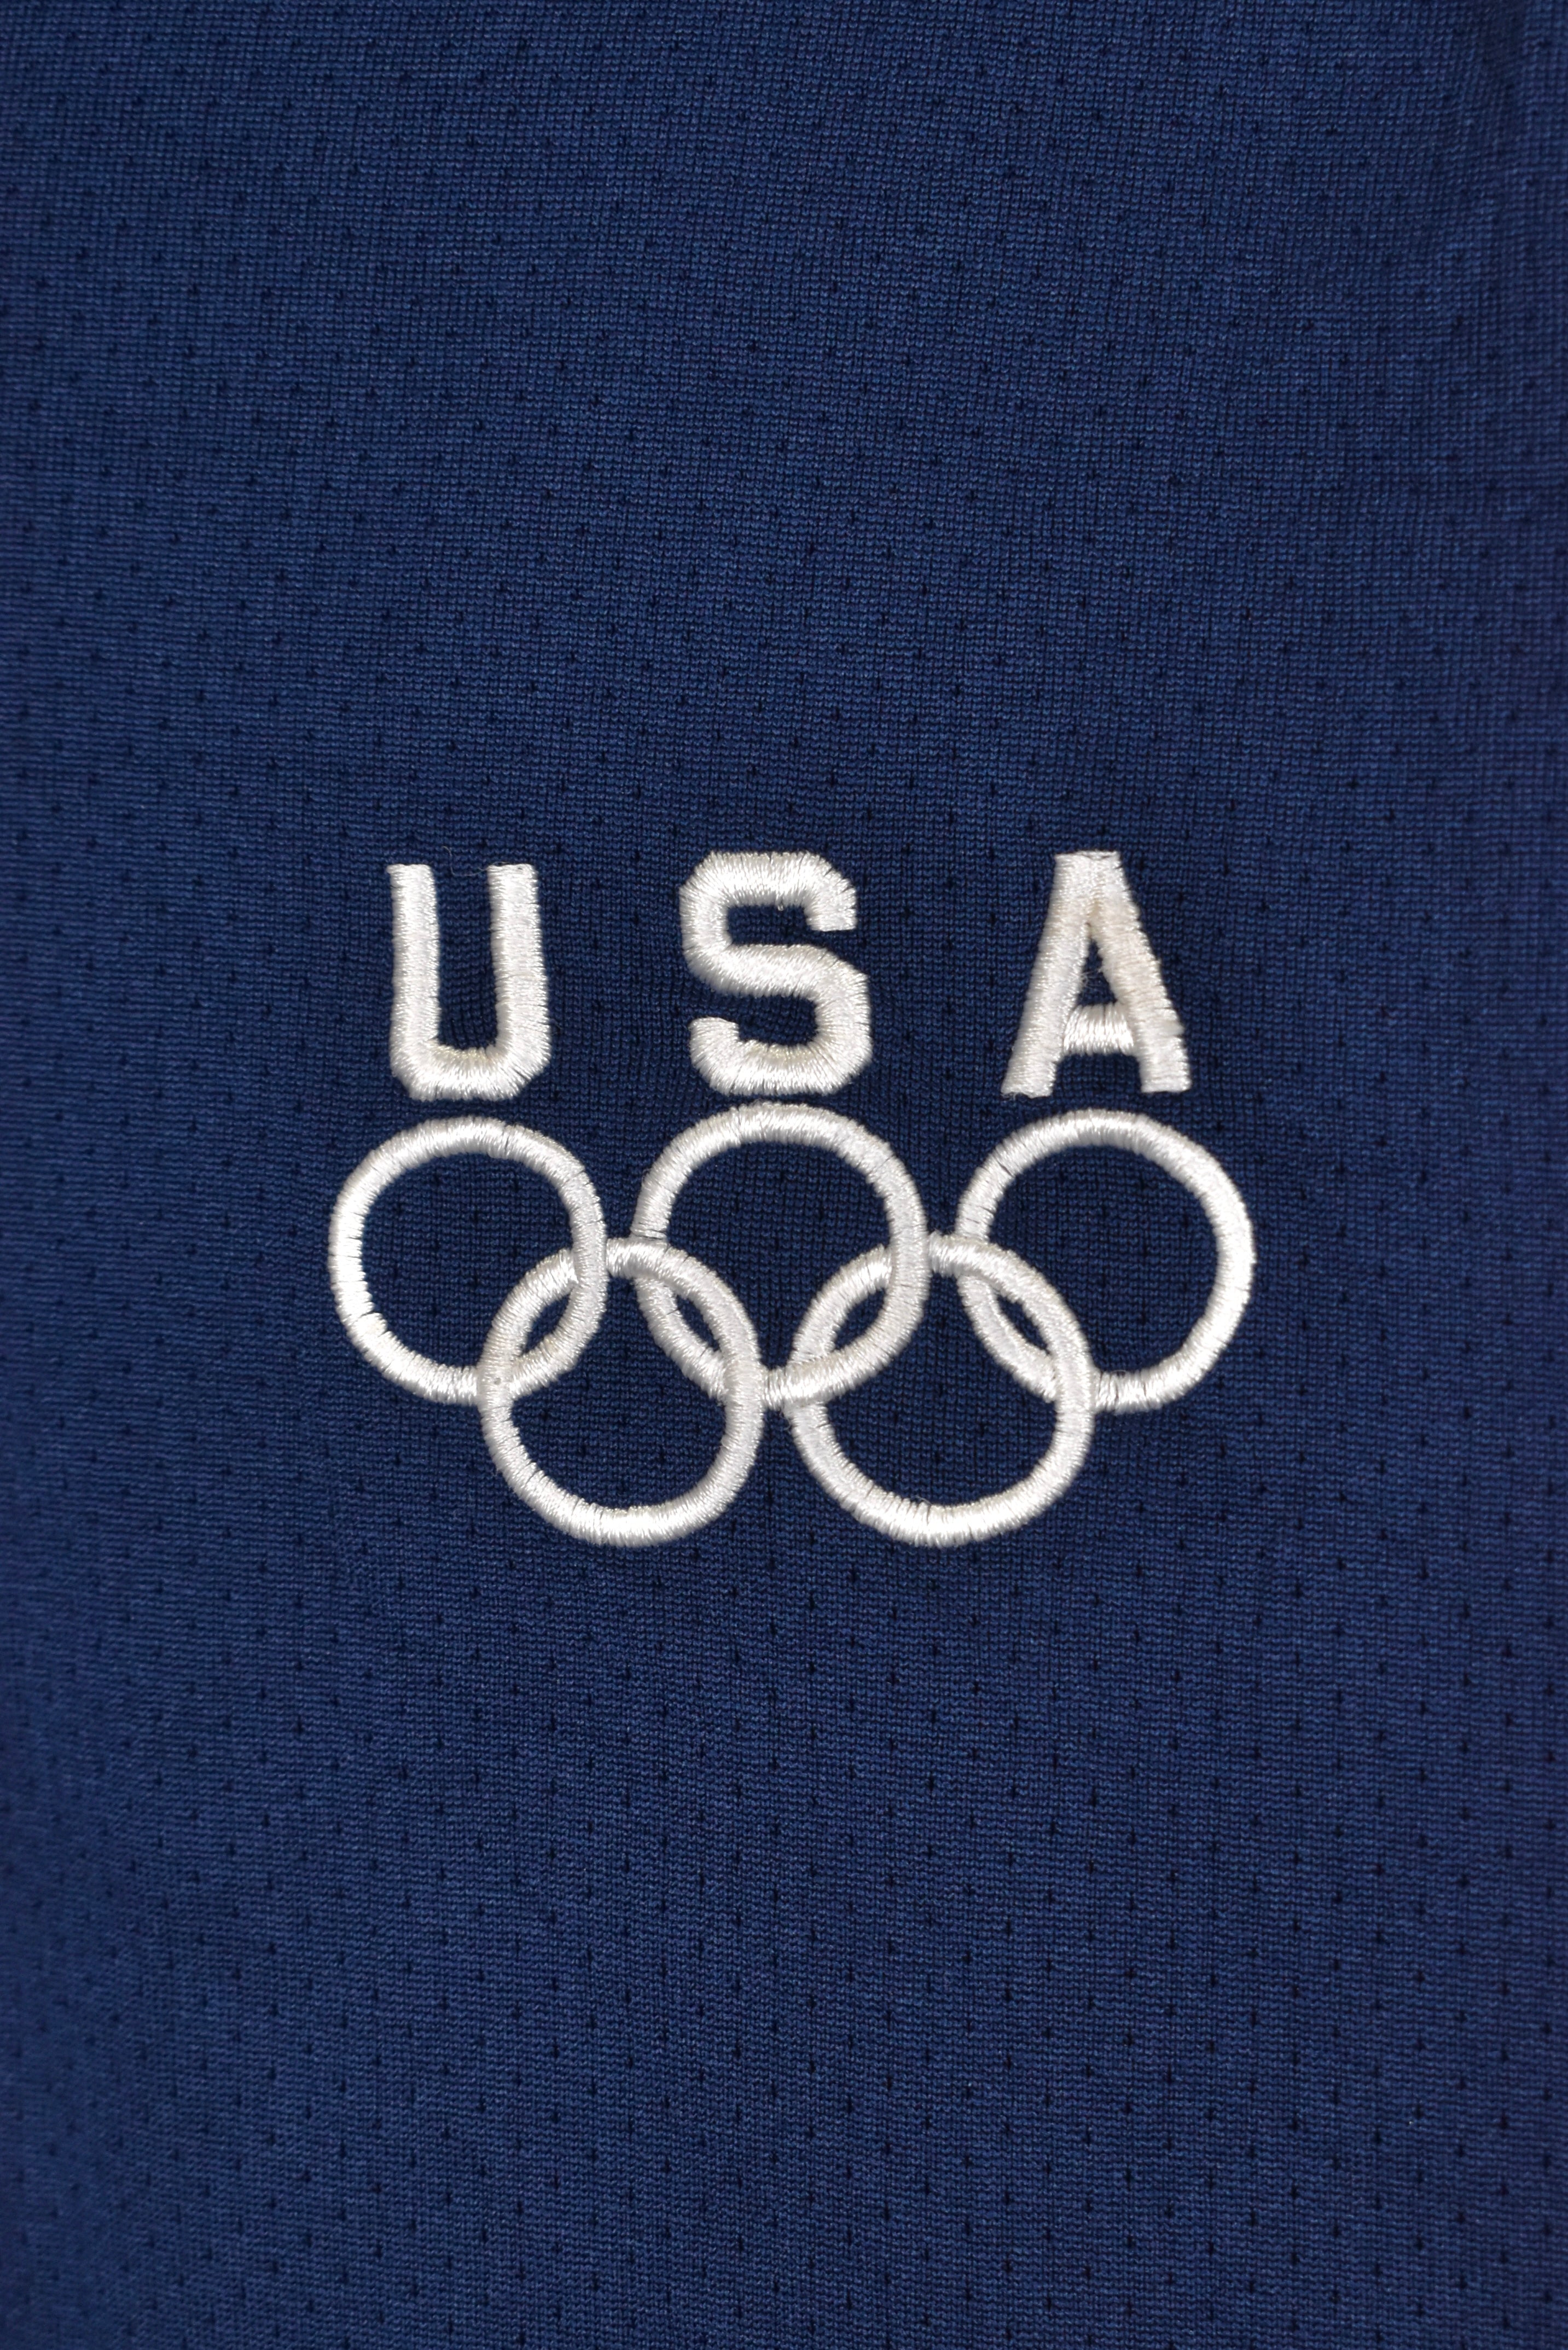 Vintage Nike sweatshirt, USA Olympic embroidered polo - AU XL